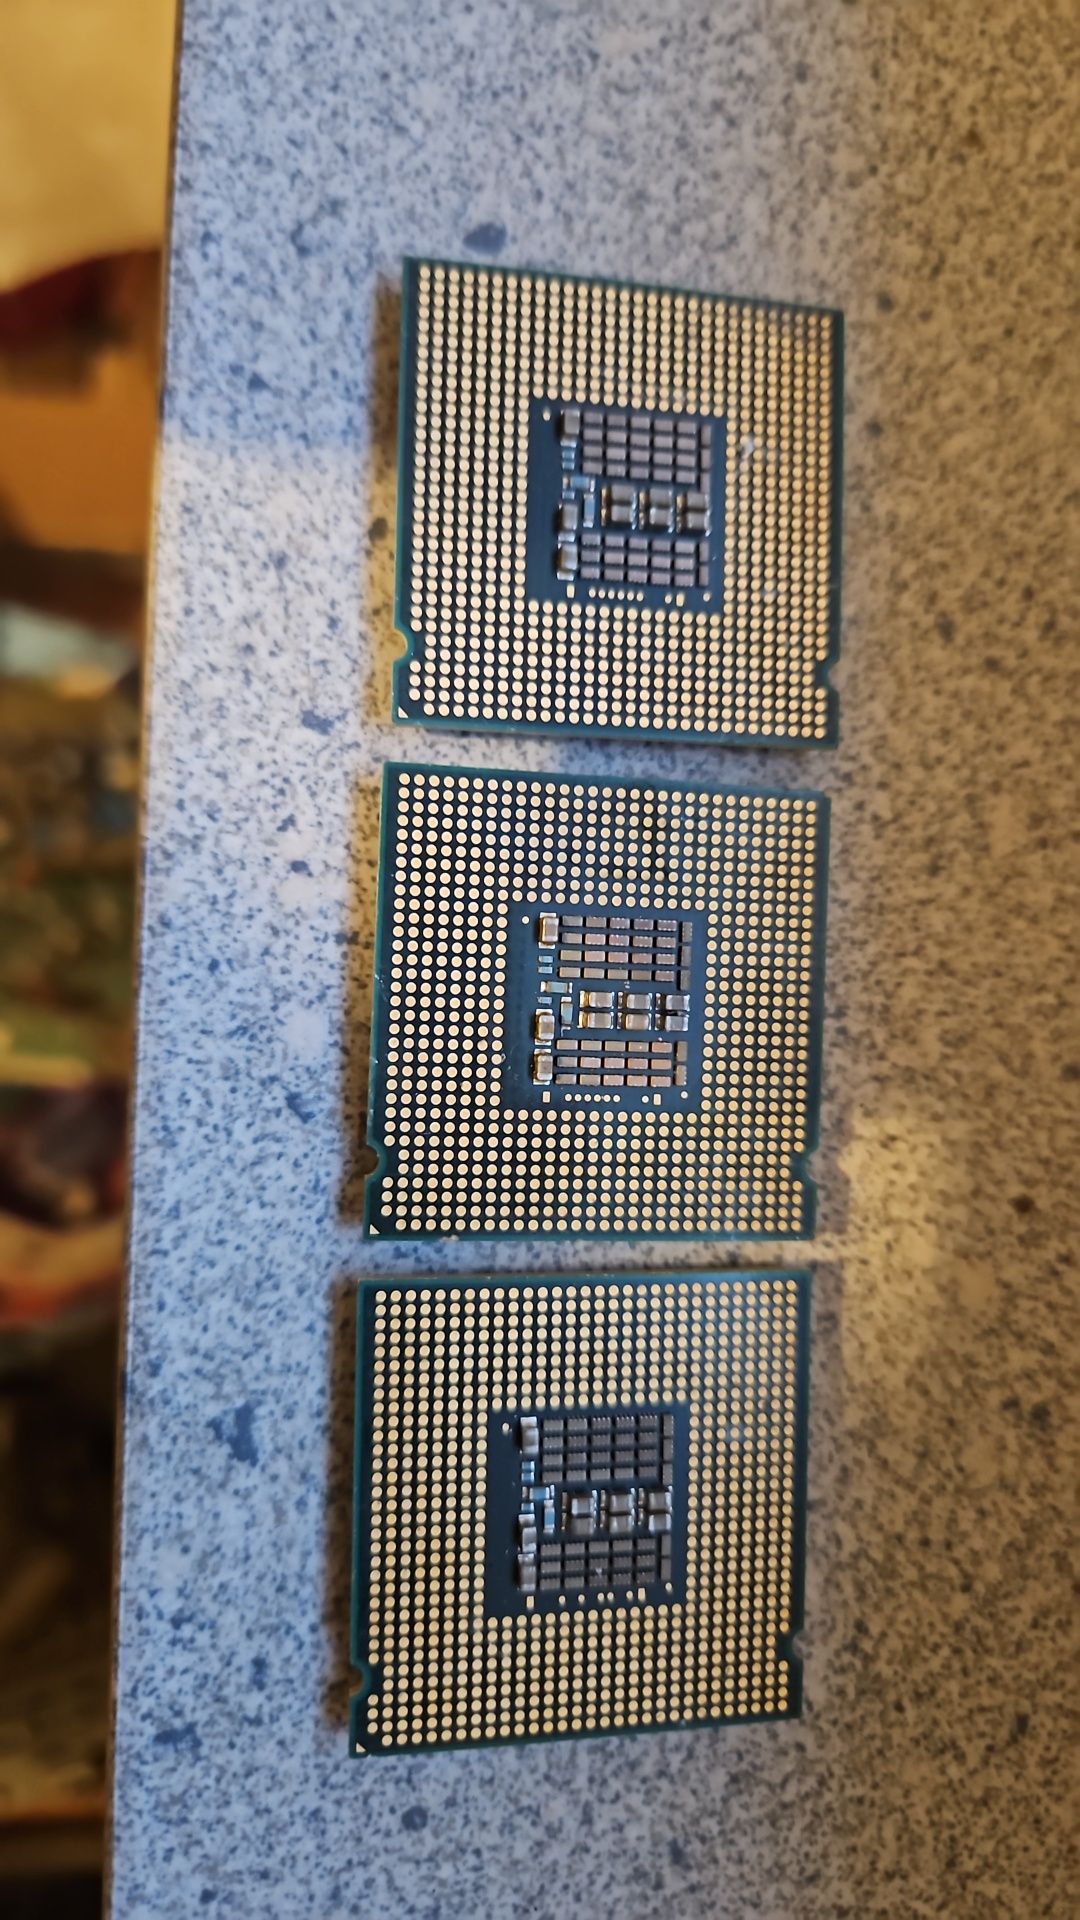 Lot 3 procesoare socket 775 guad q9450, q9550 si q9650